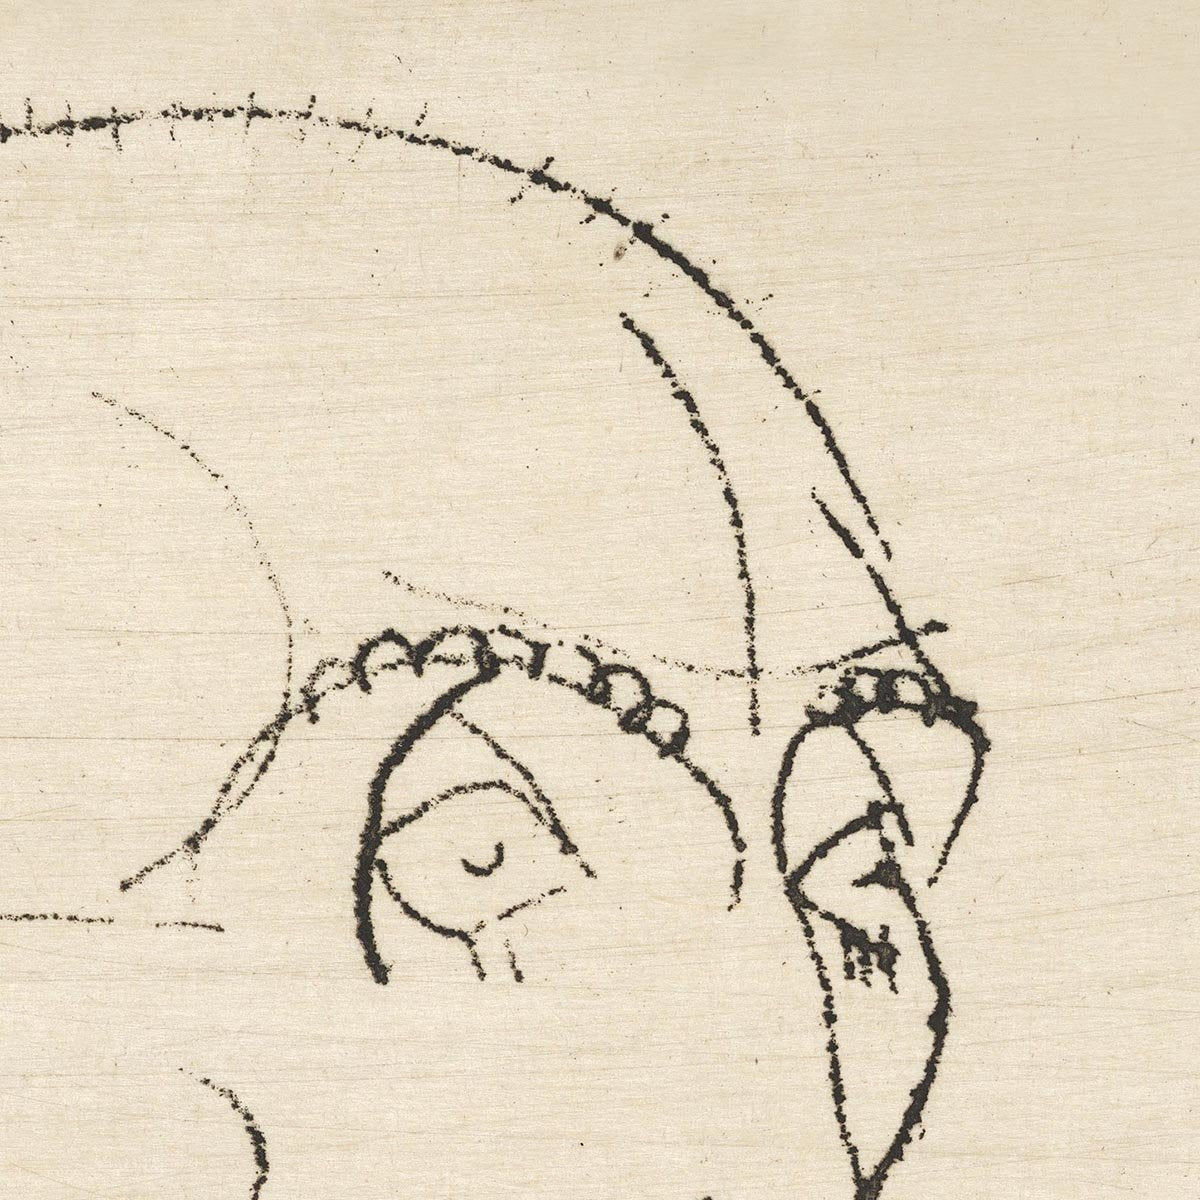 Portrait of a Man by Egon Schiele